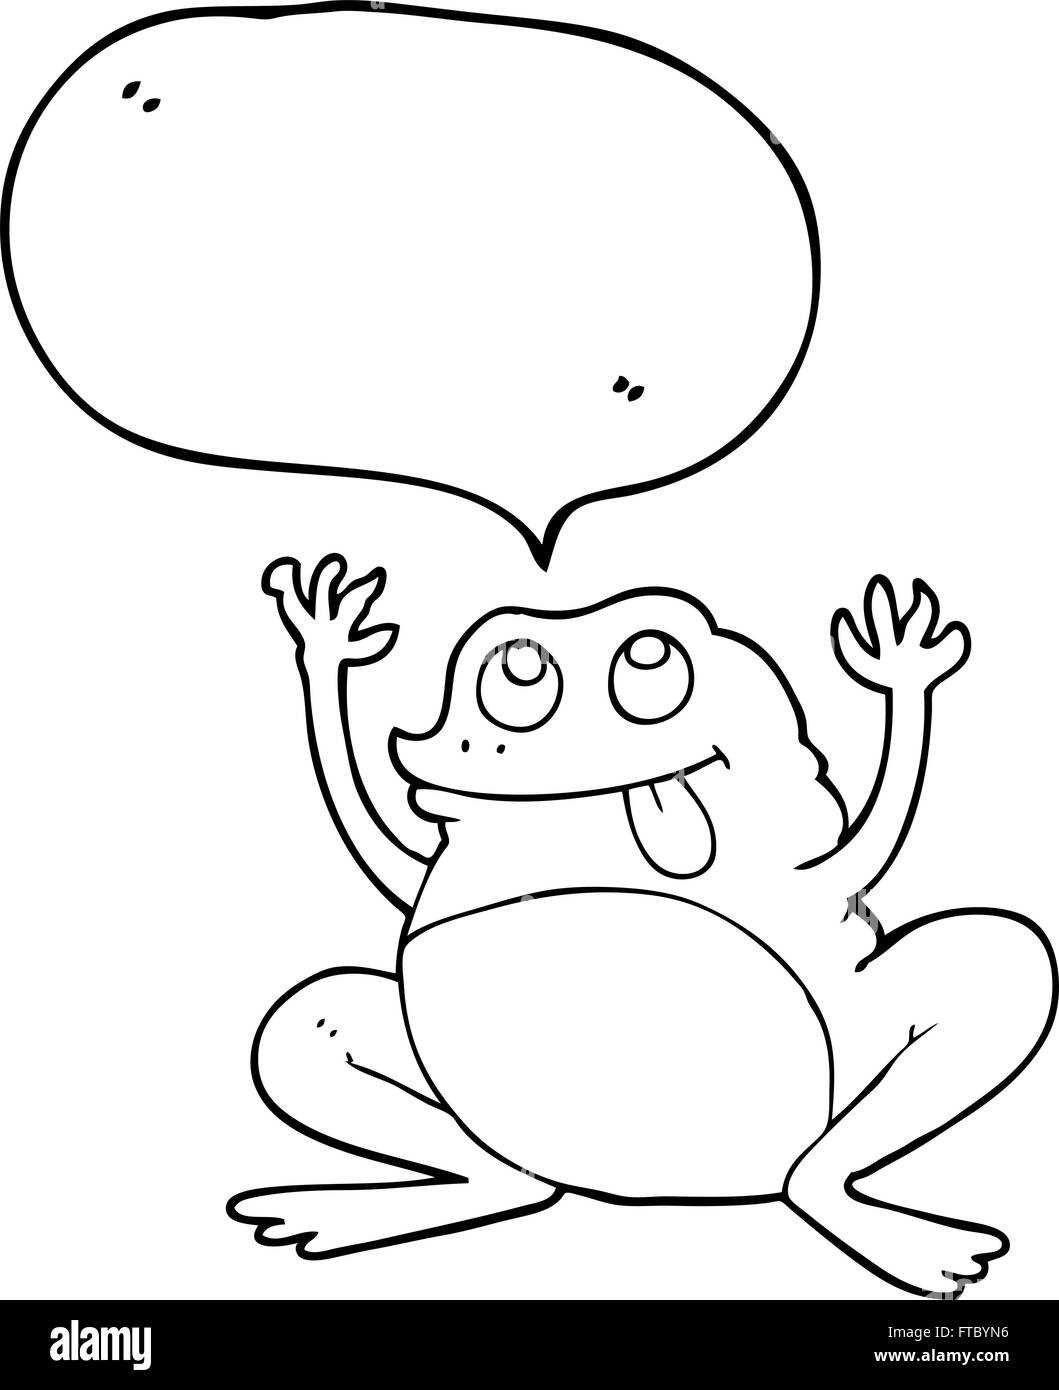 funny freehand drawn speech bubble cartoon frog Stock Vector